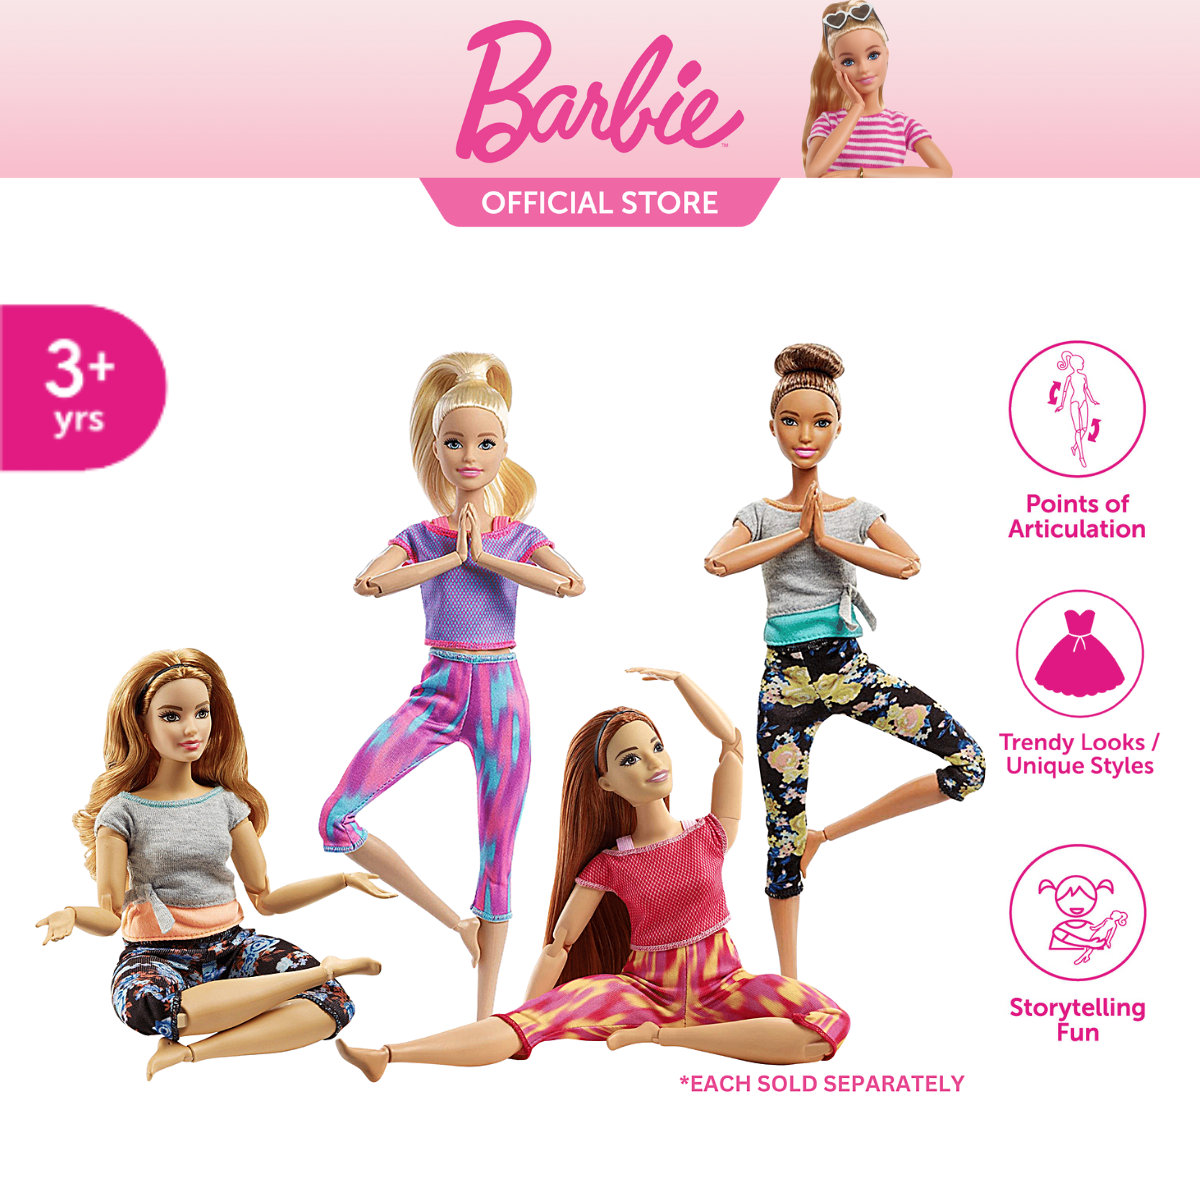 Barbie Made to Move Doll Gymnastics Yoga Dancer Dolls with 22